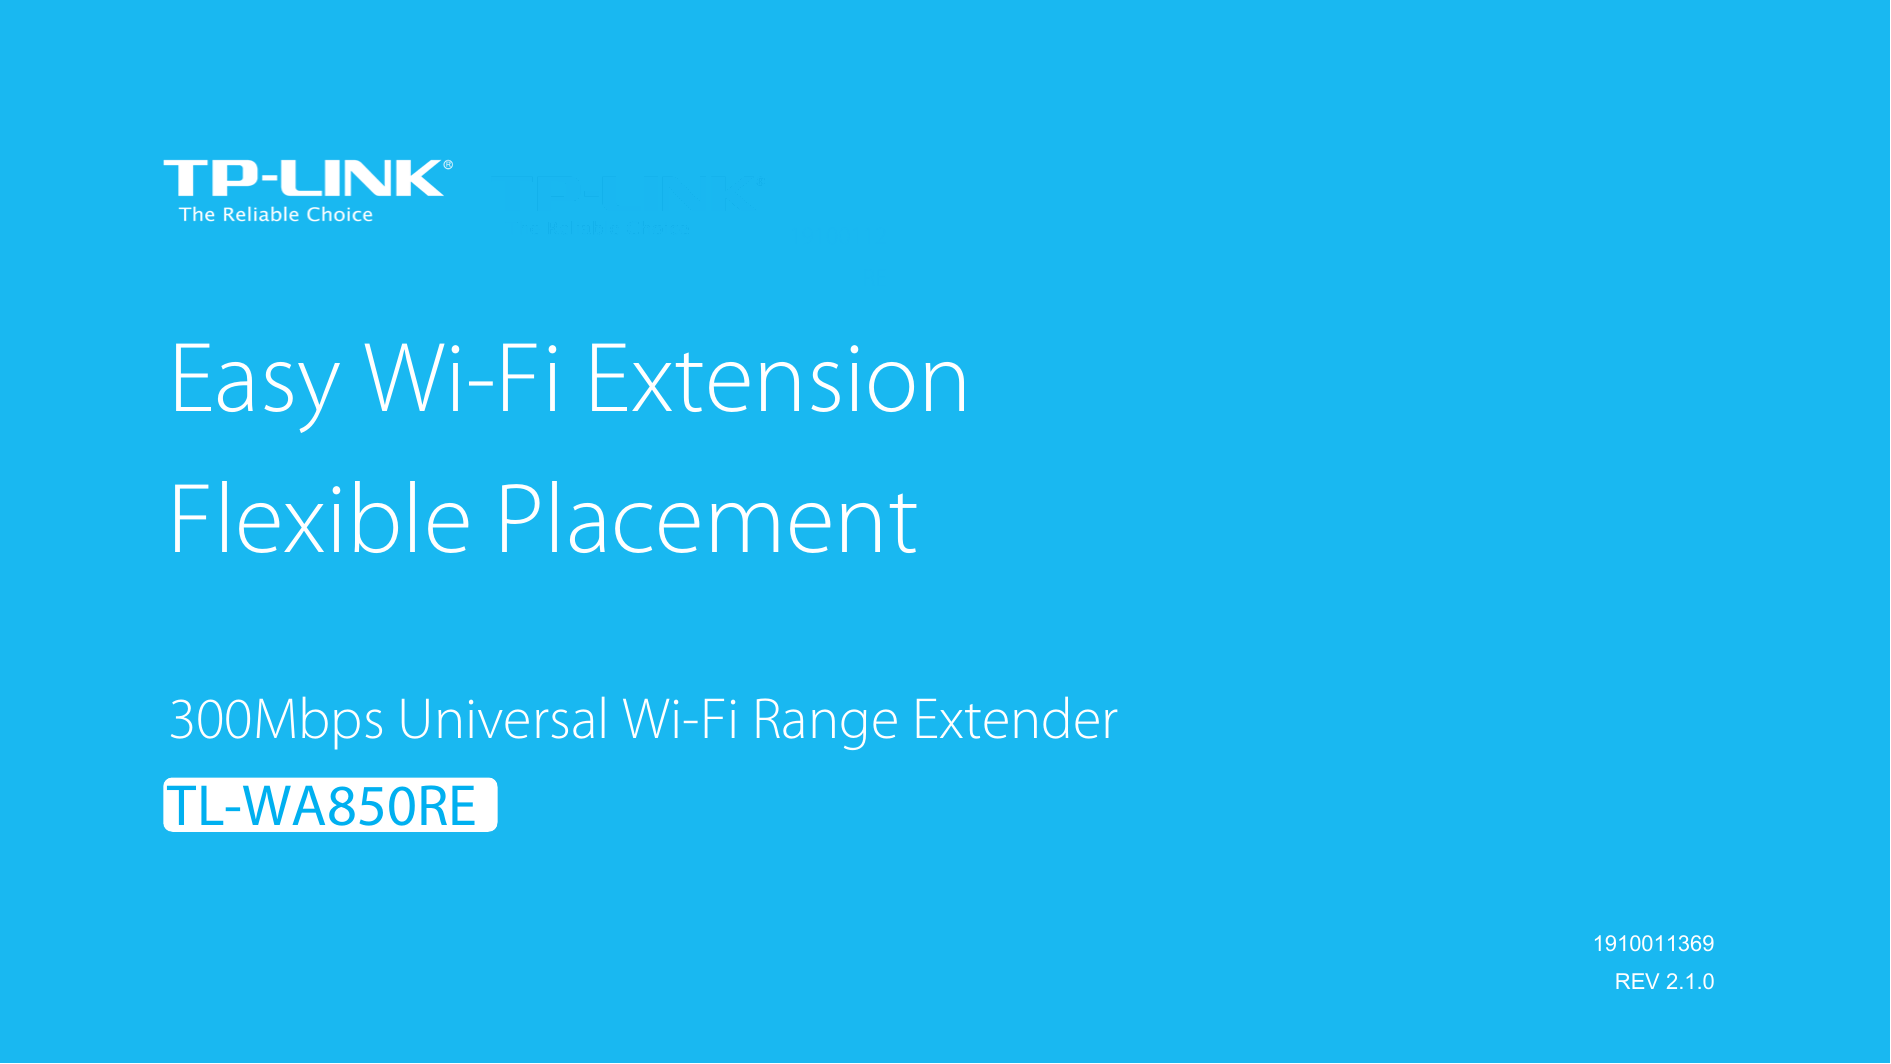   19100112 RE    1910011369  REV 2.1.0 Easy Wi-Fi Extension Flexible Placement  300Mbps Universal Wi-Fi Range Extender    TL-WA850RE    